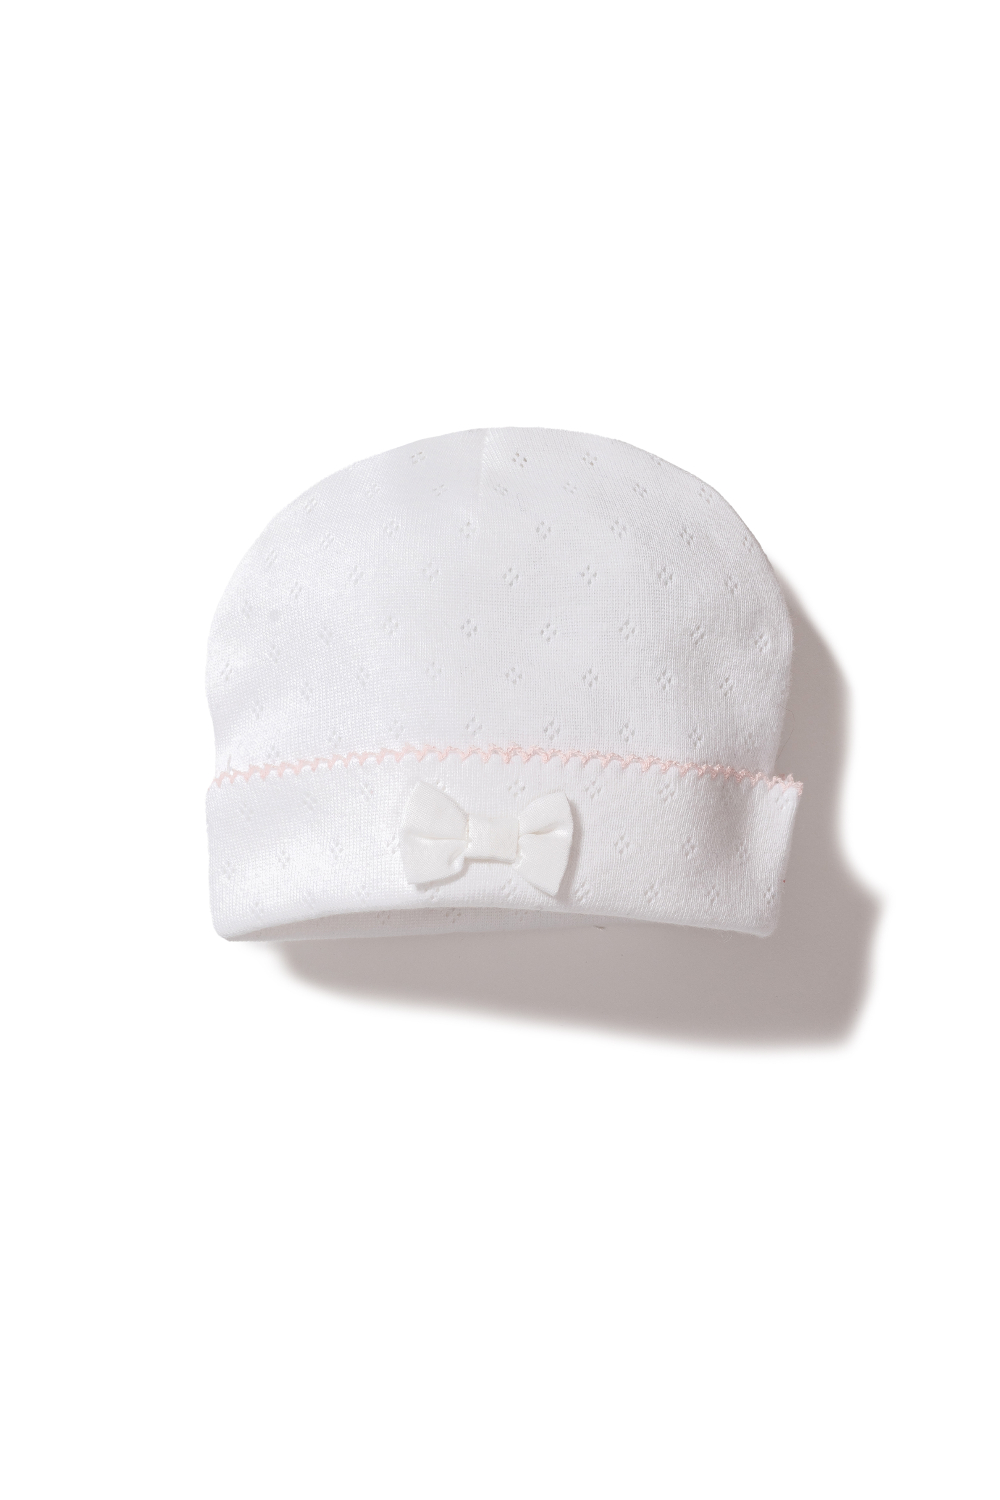 White rose newborn hat